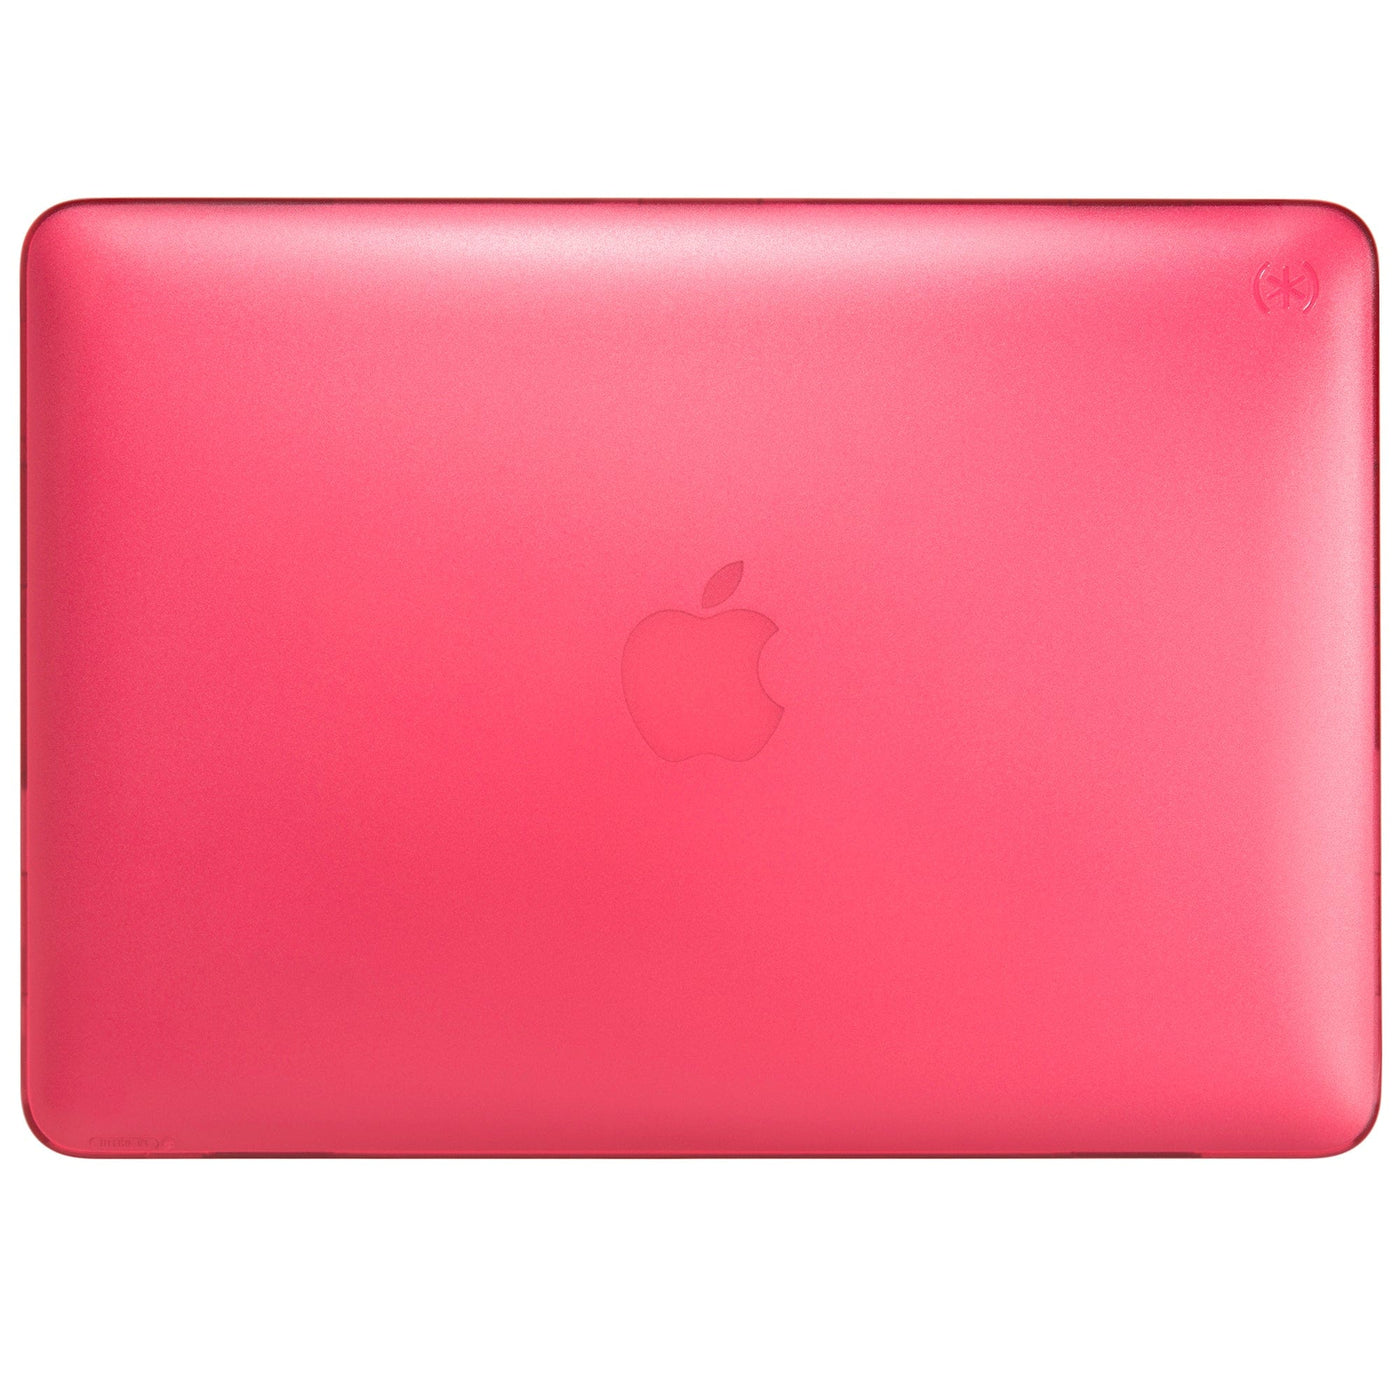 Smartshell Macbook Pro With Retina Display 13 Cases By Speck Products Apple Macbook Pro Retina